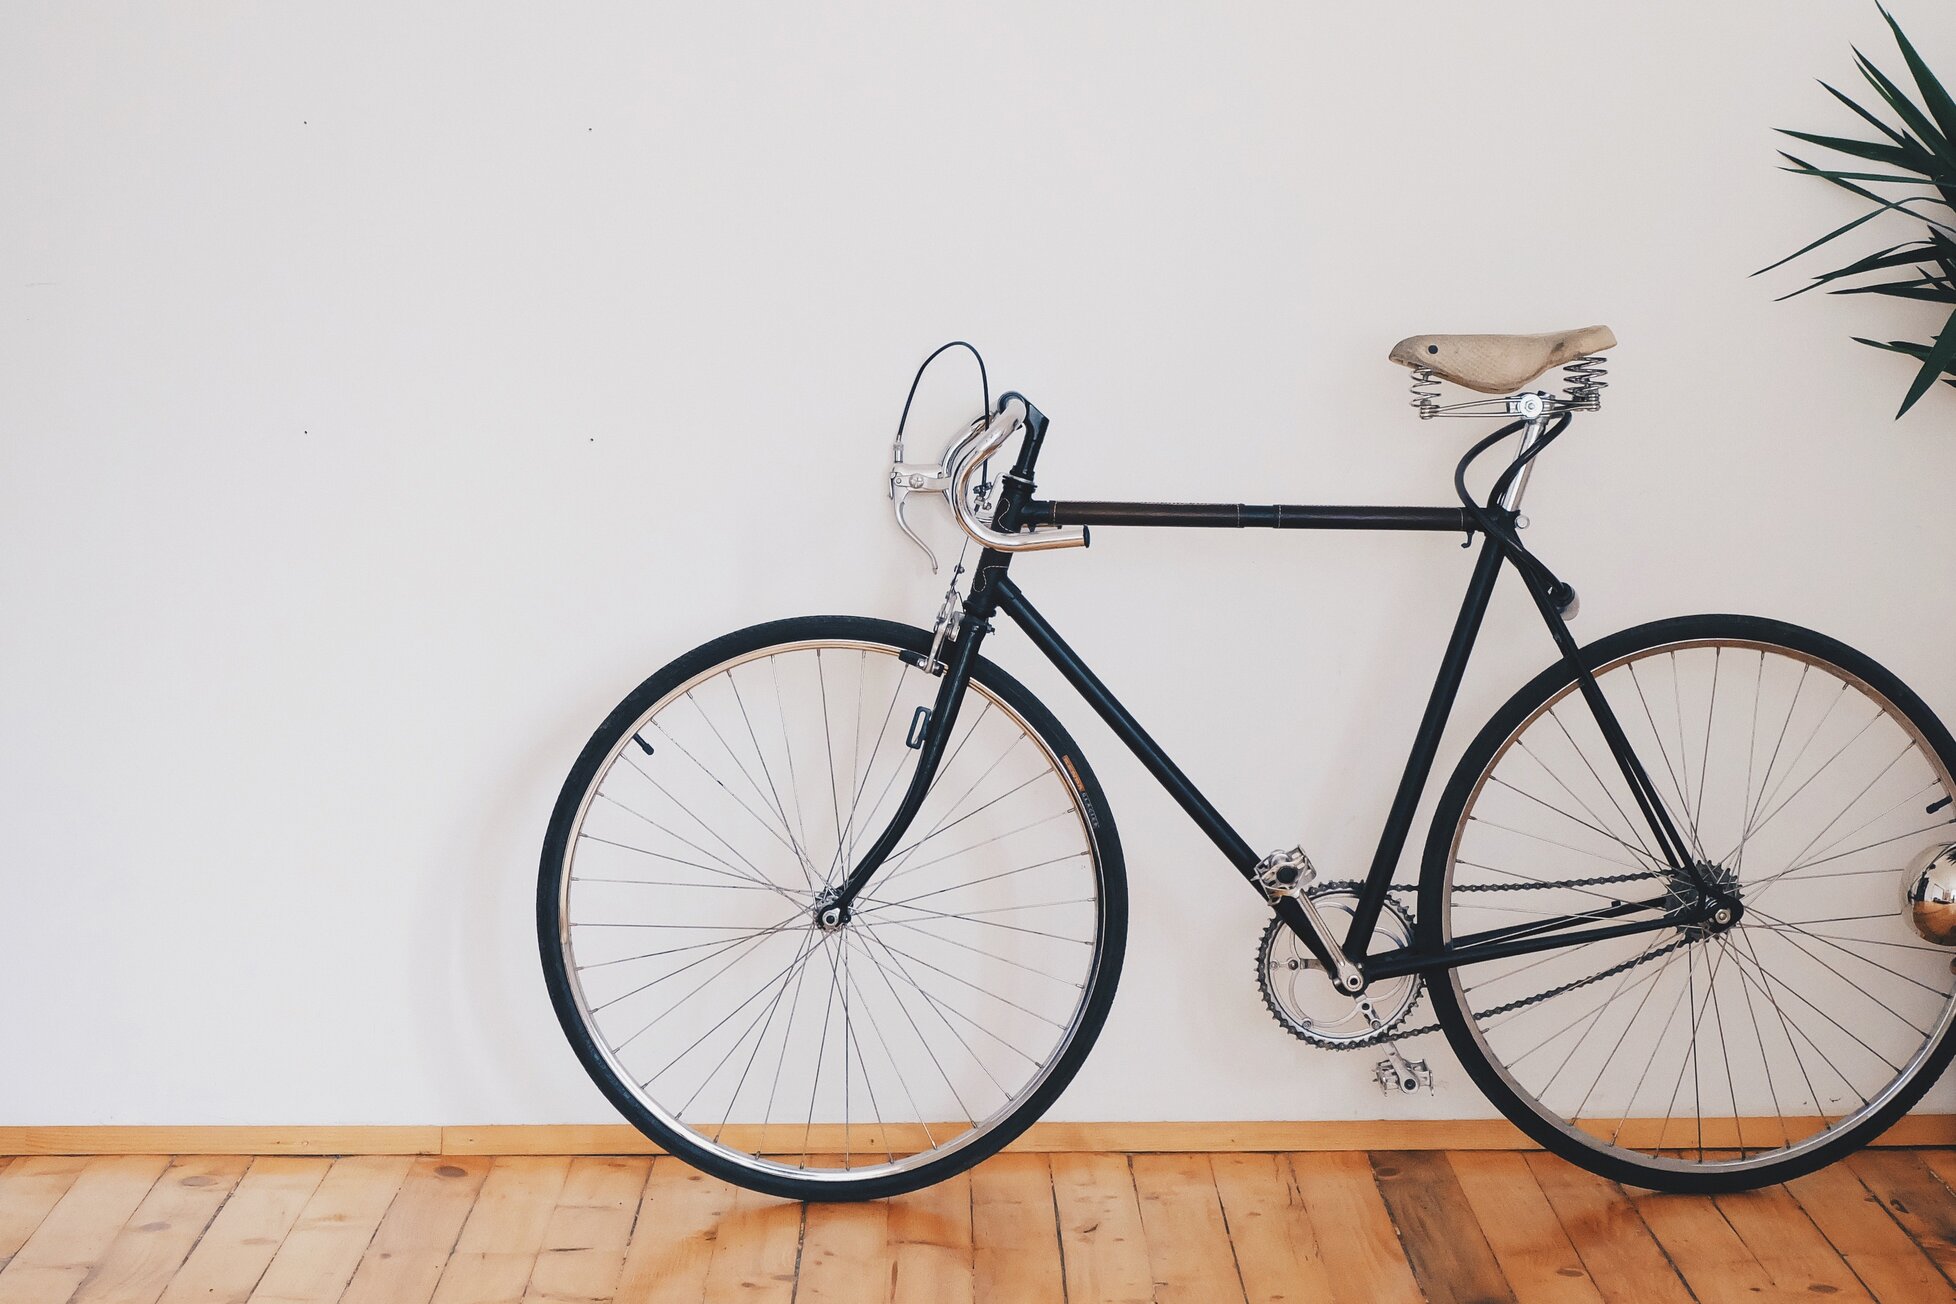 Circular Economy Bicycle